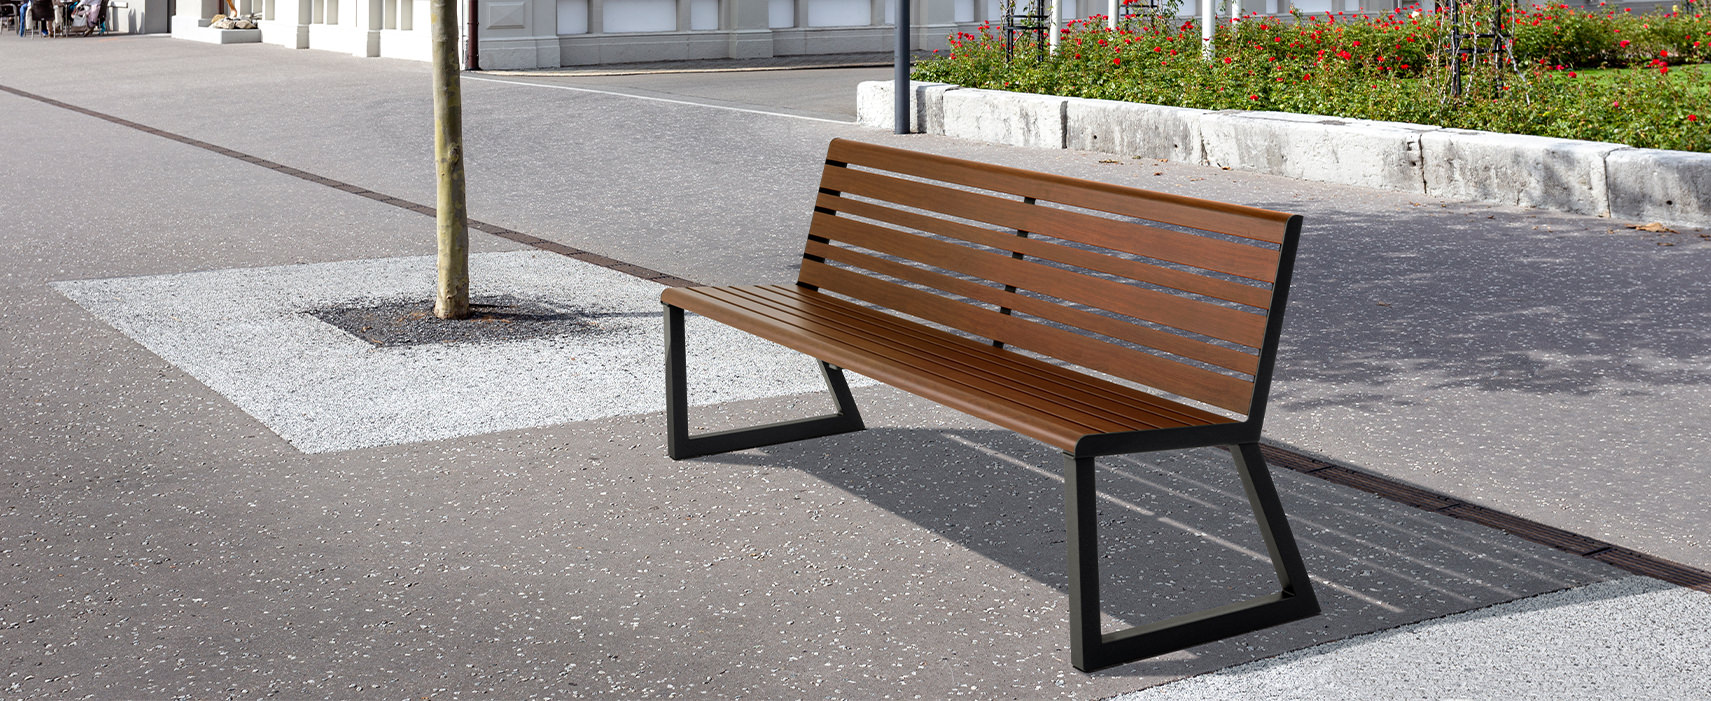 Streetscape bench.